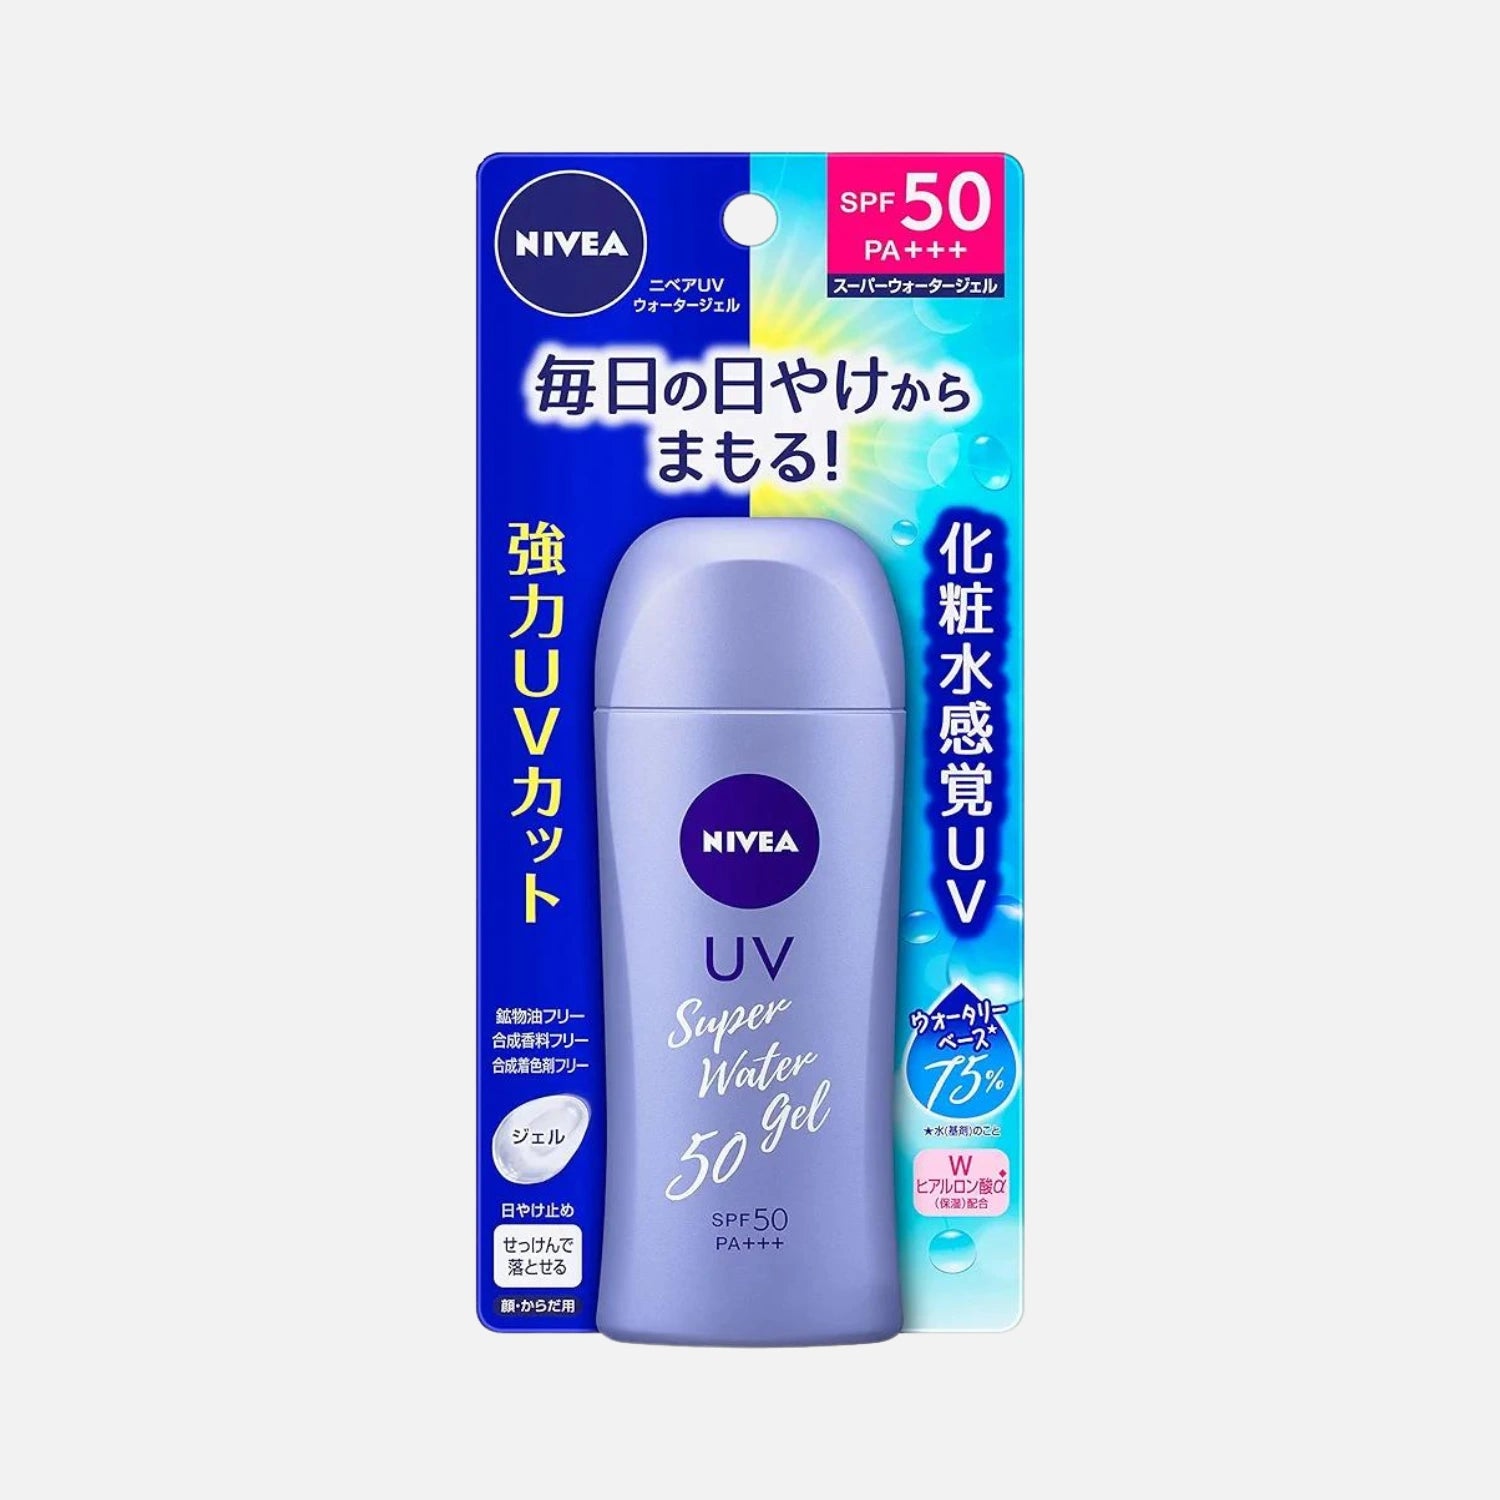 Nivea Japan Super Water Gel SPF 50 PA+++ 80g